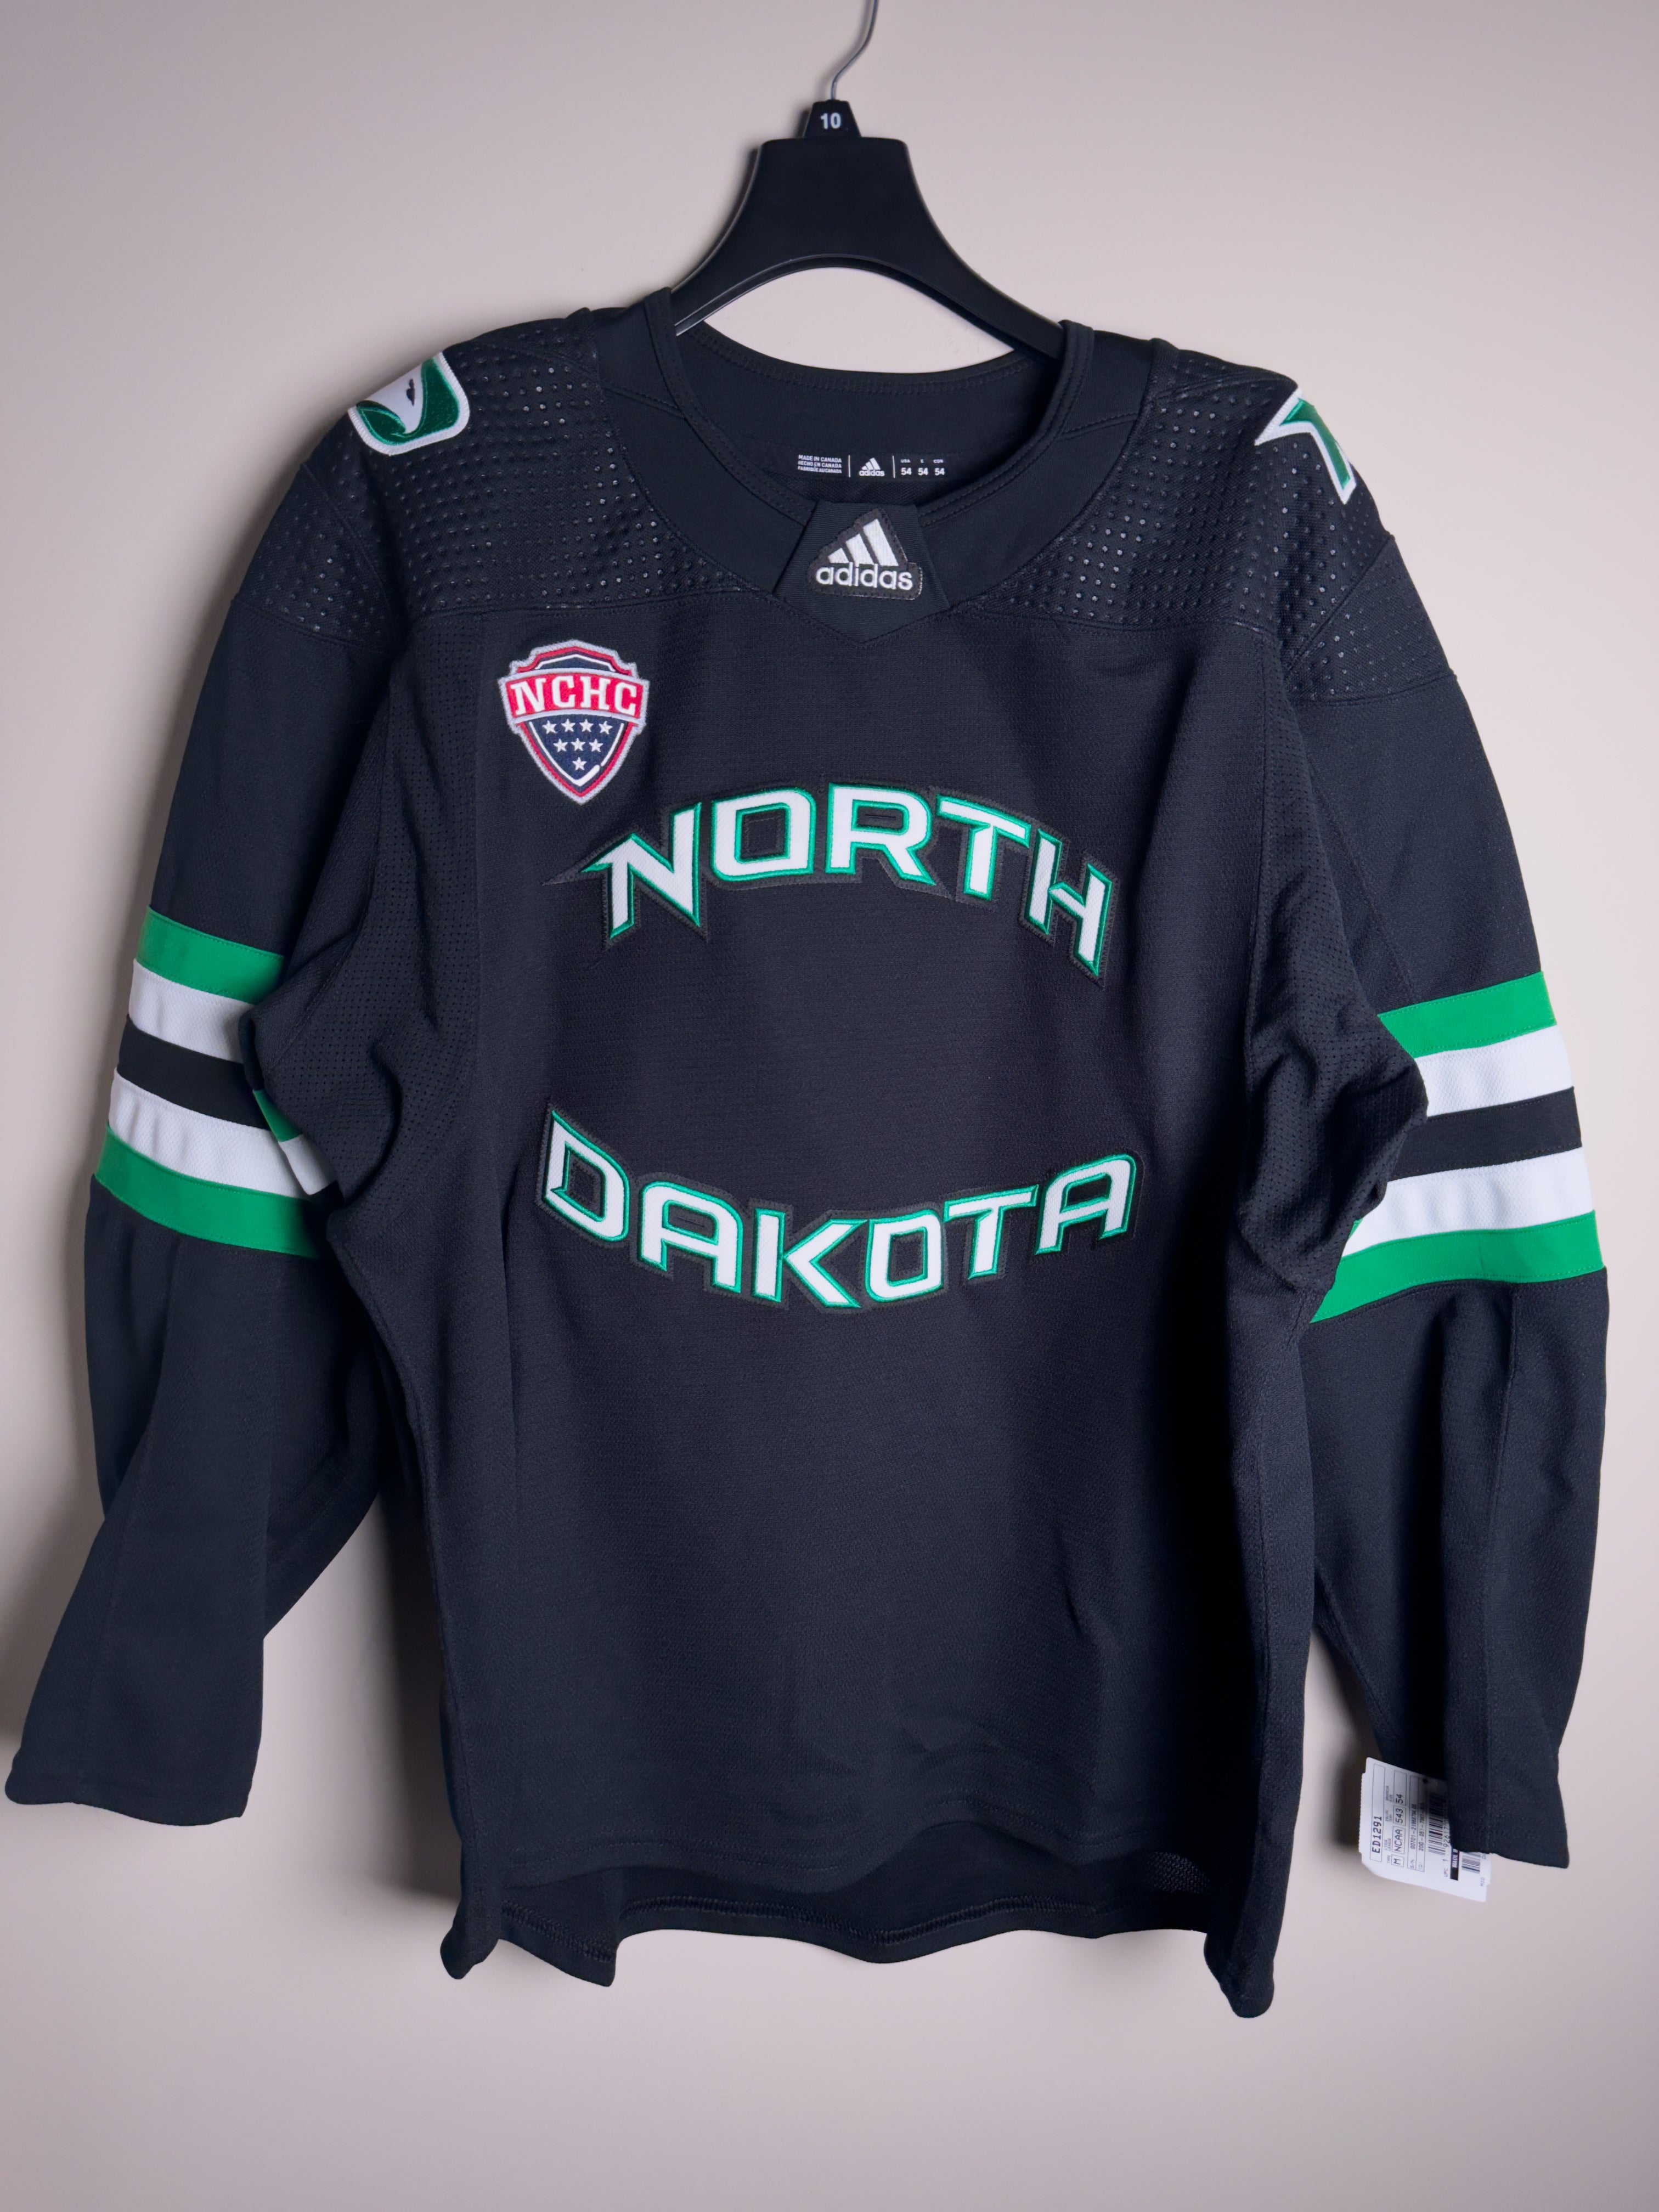 North Dakota Fighting Hawks Adidas MiC Team Issued Jersey Size 54 (Player Size)